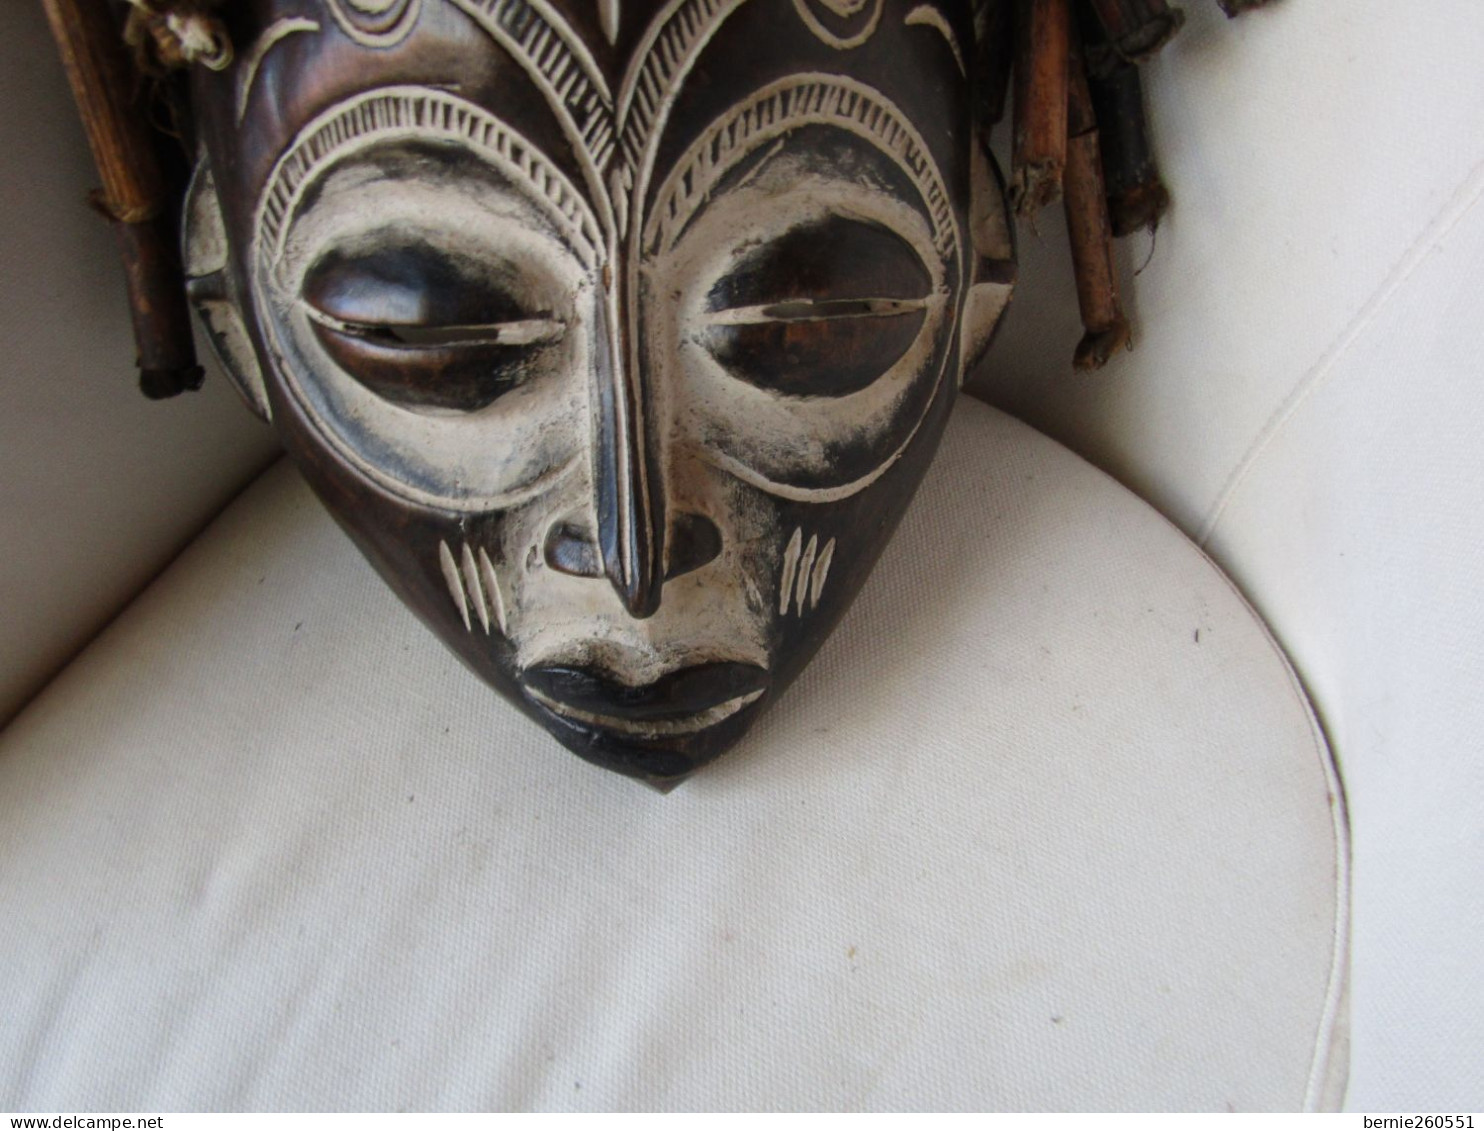 Formidable masque africain, origine Angola